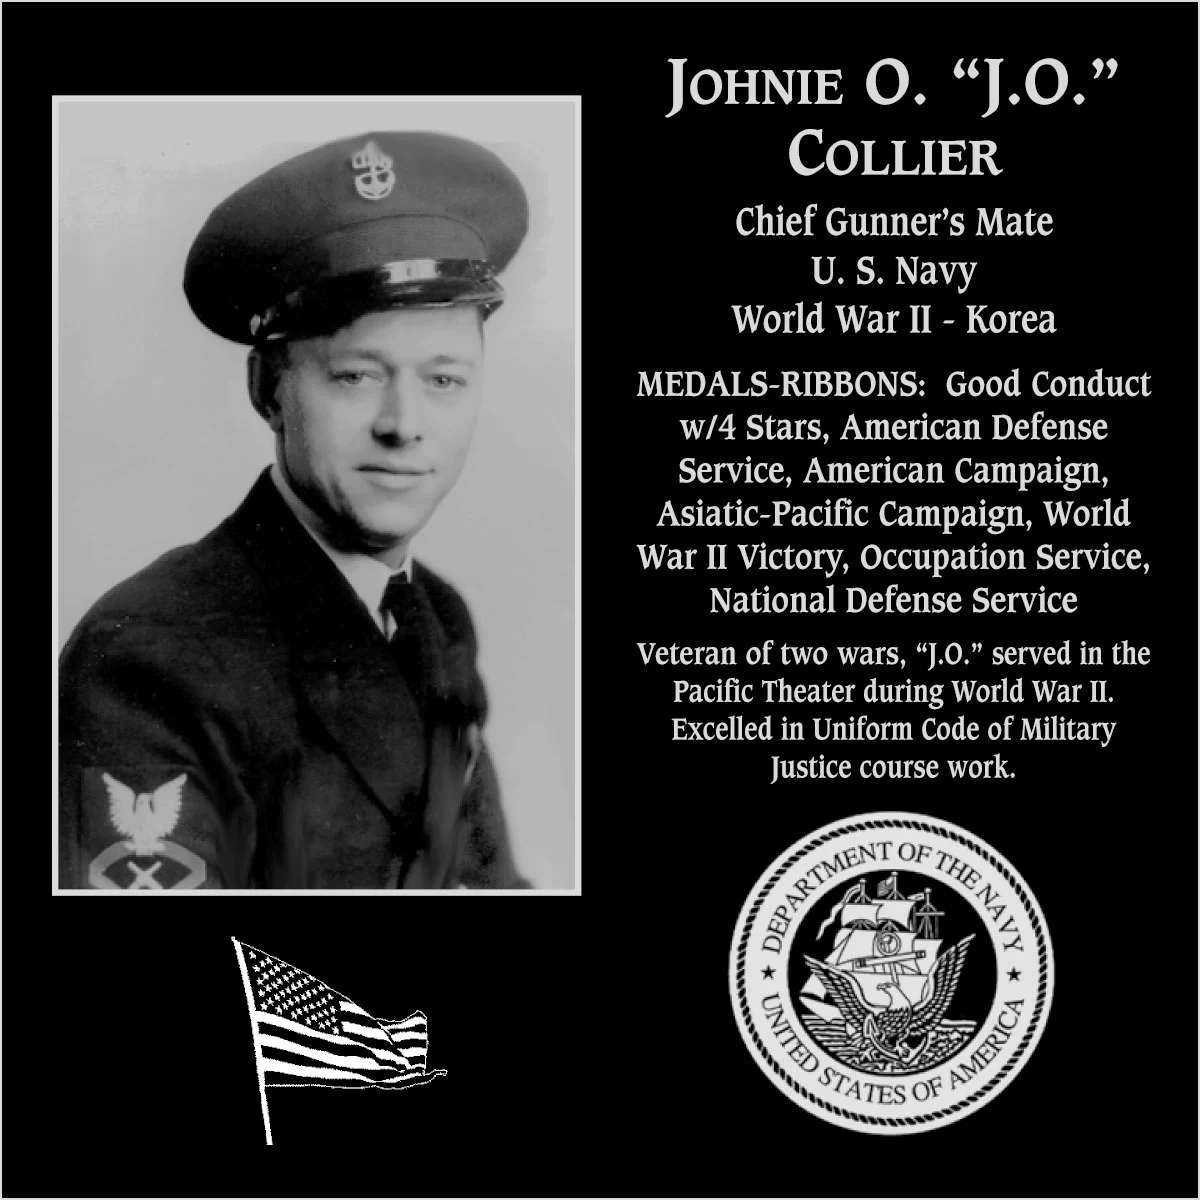 Johnnie O “J.O.” Collier